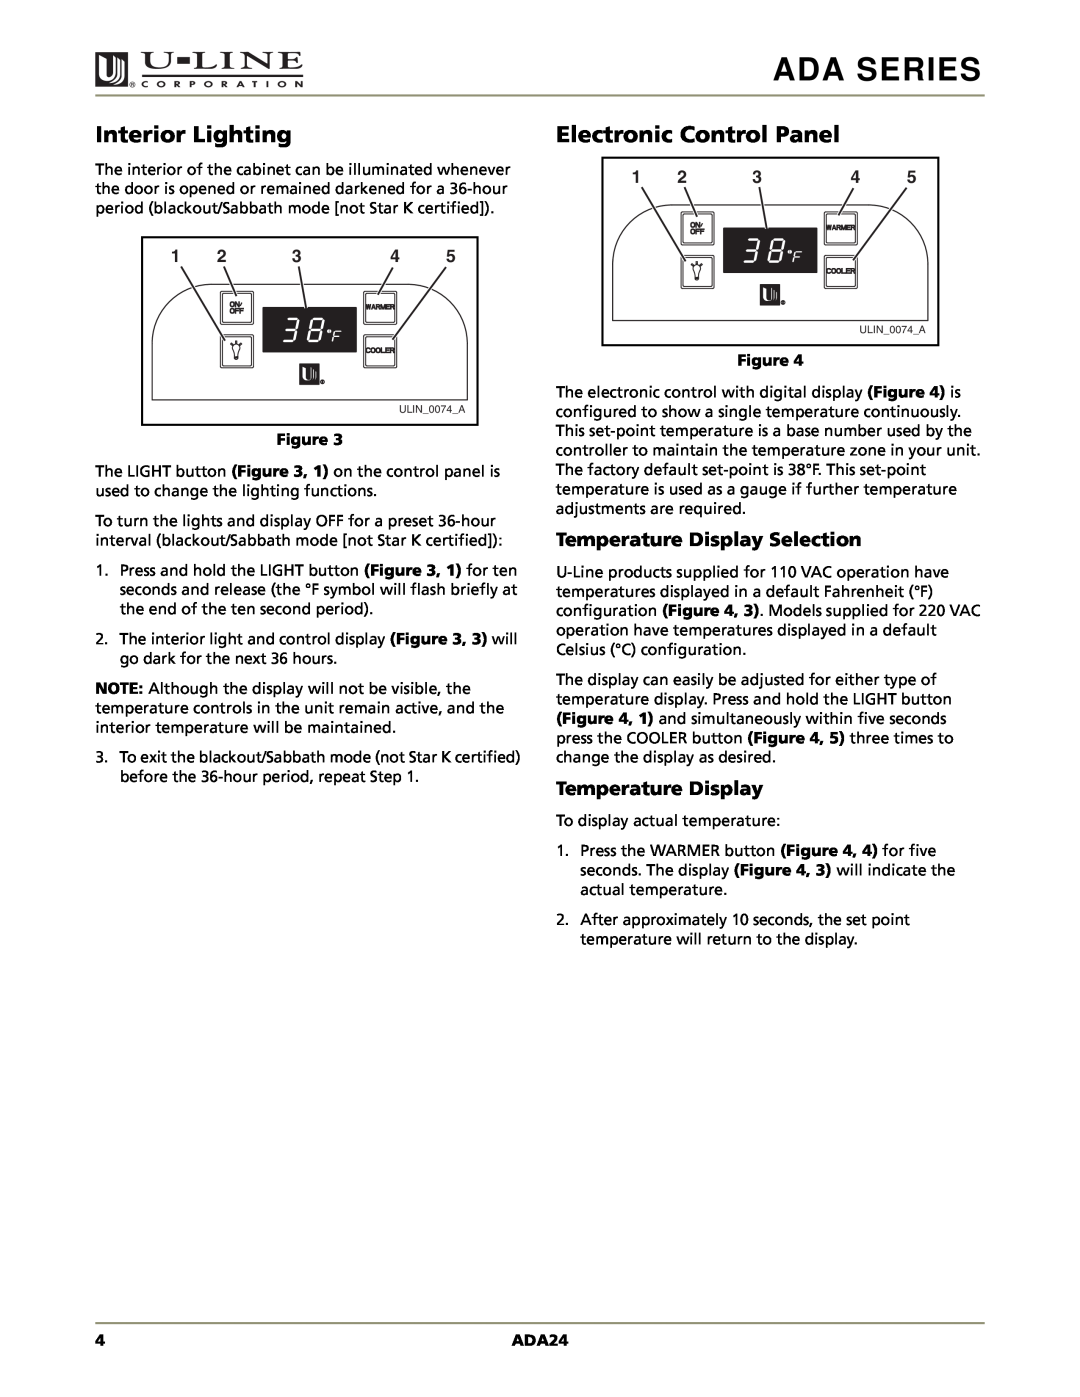 U-Line ADA24RGL manual Interior Lighting, Electronic Control Panel, Temperature Display Selection, Ada Series 